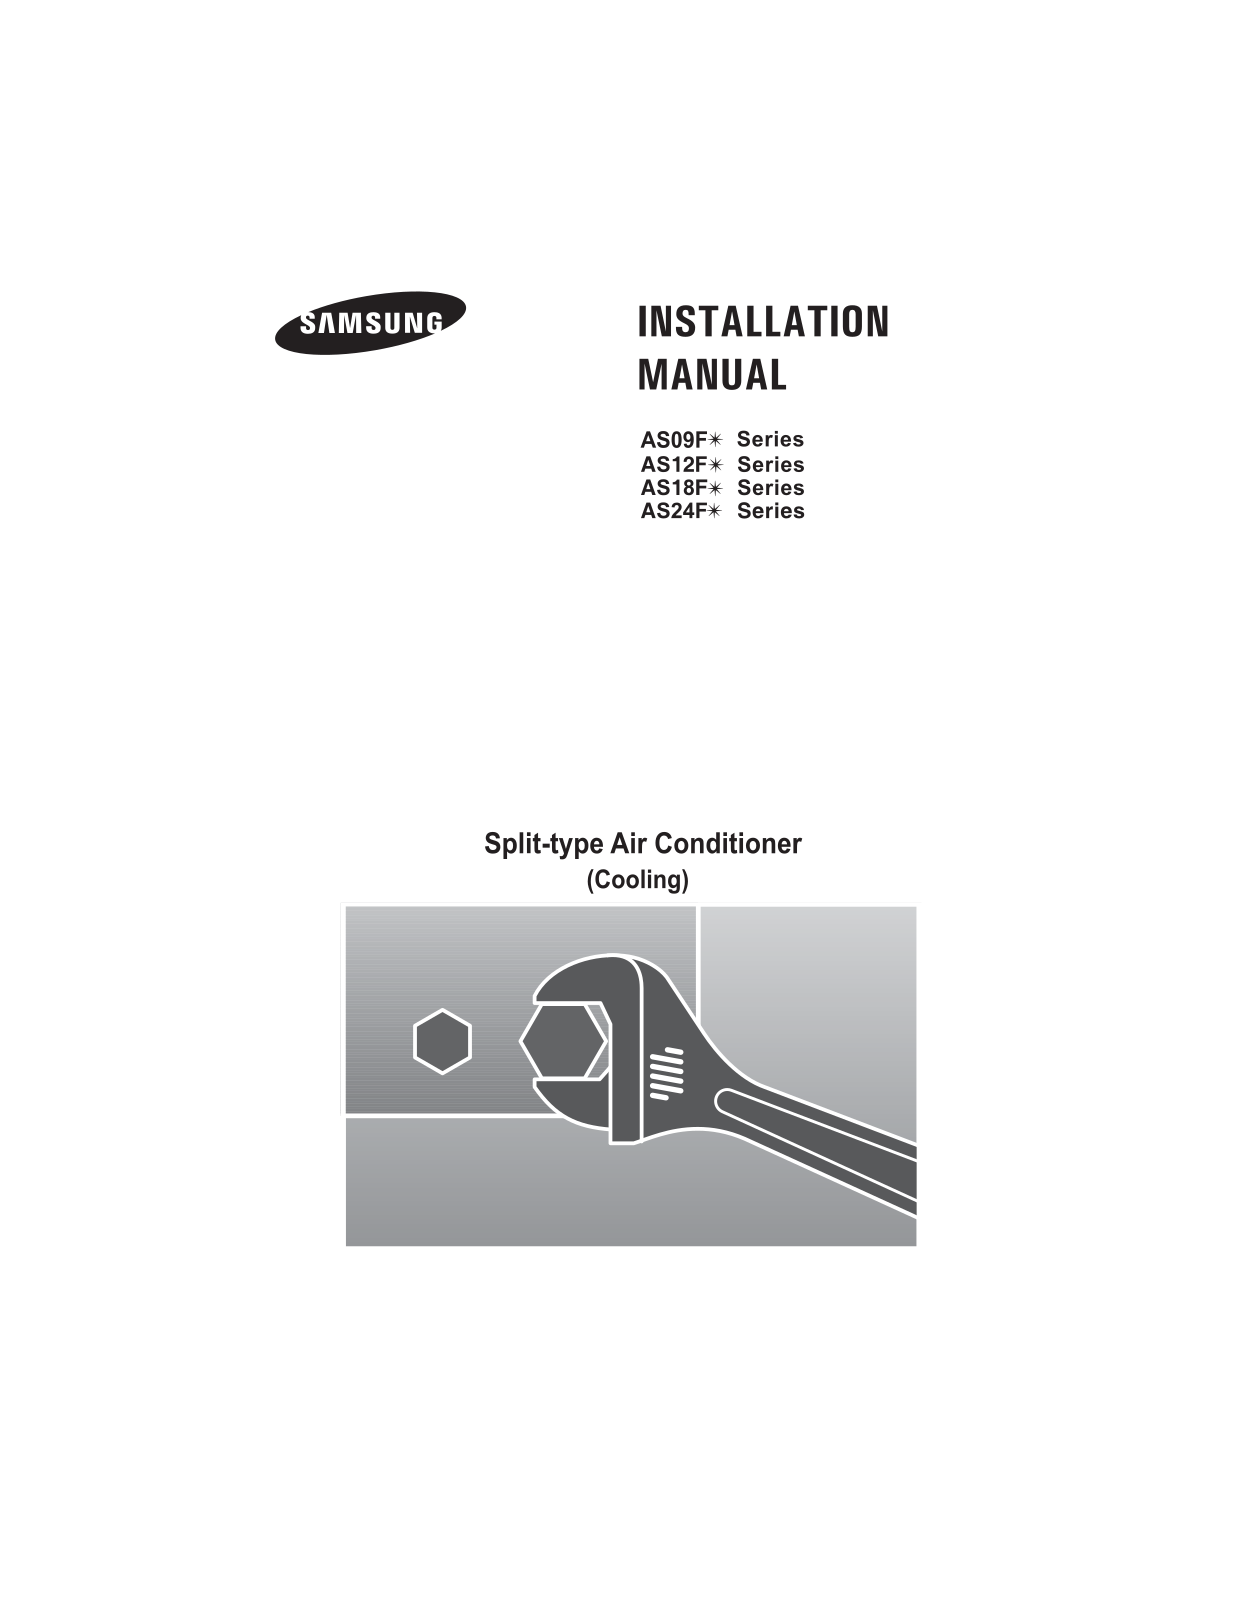 Samsung AS24FBCN, AS24FCN, AS18FLX, AS24FBCX, AS09FLX Manual